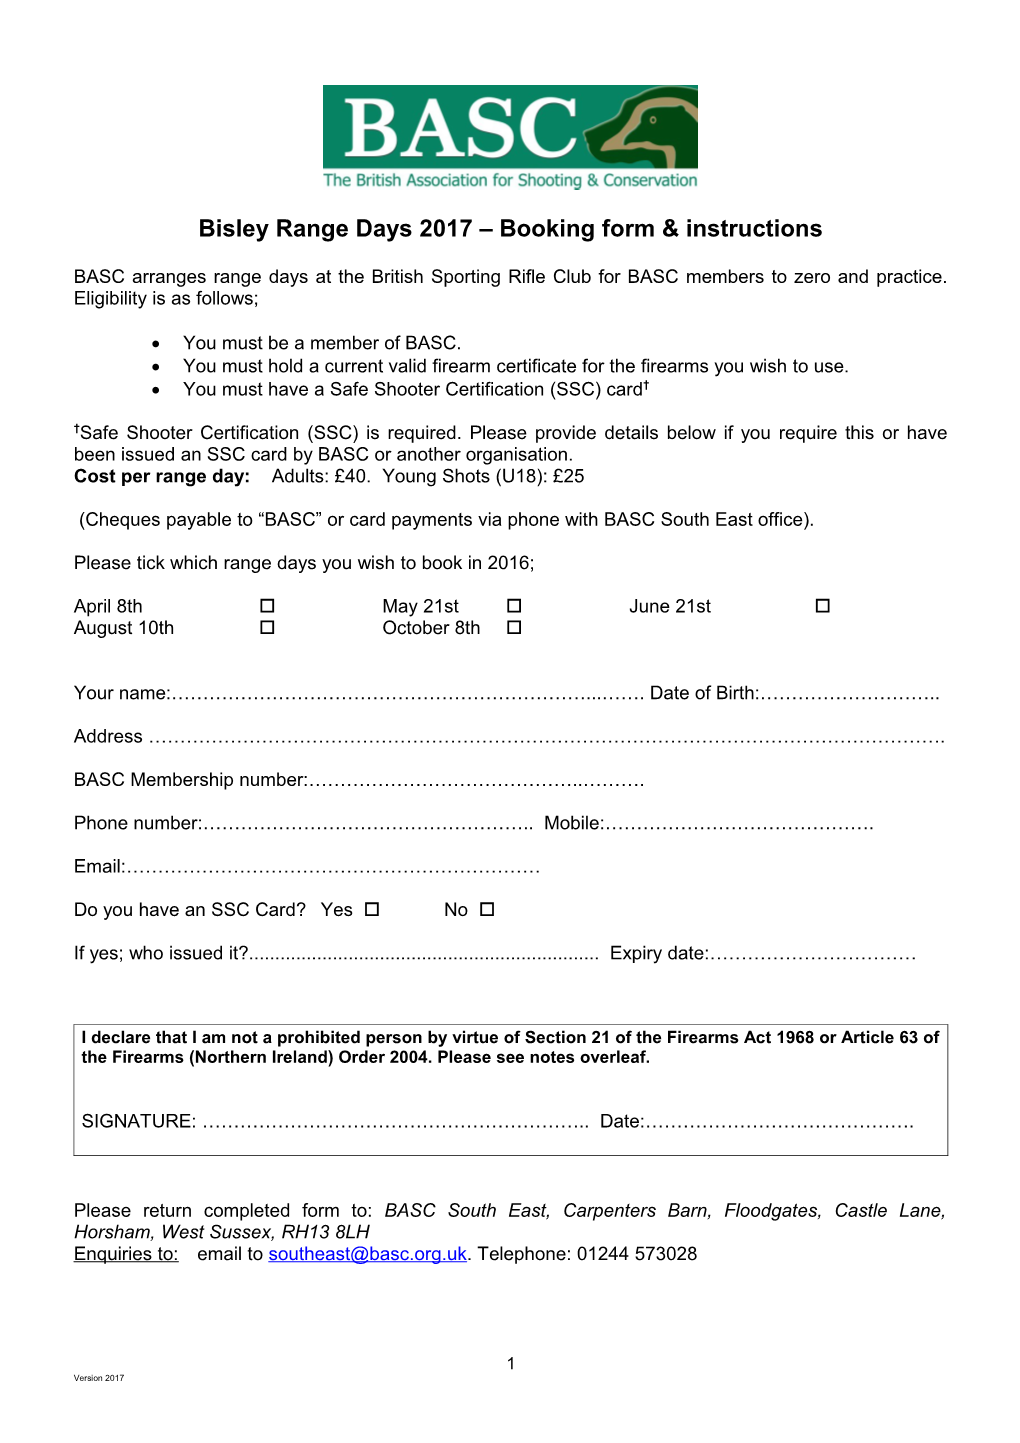 Bisley Range Days 2017 Booking Form & Instructions